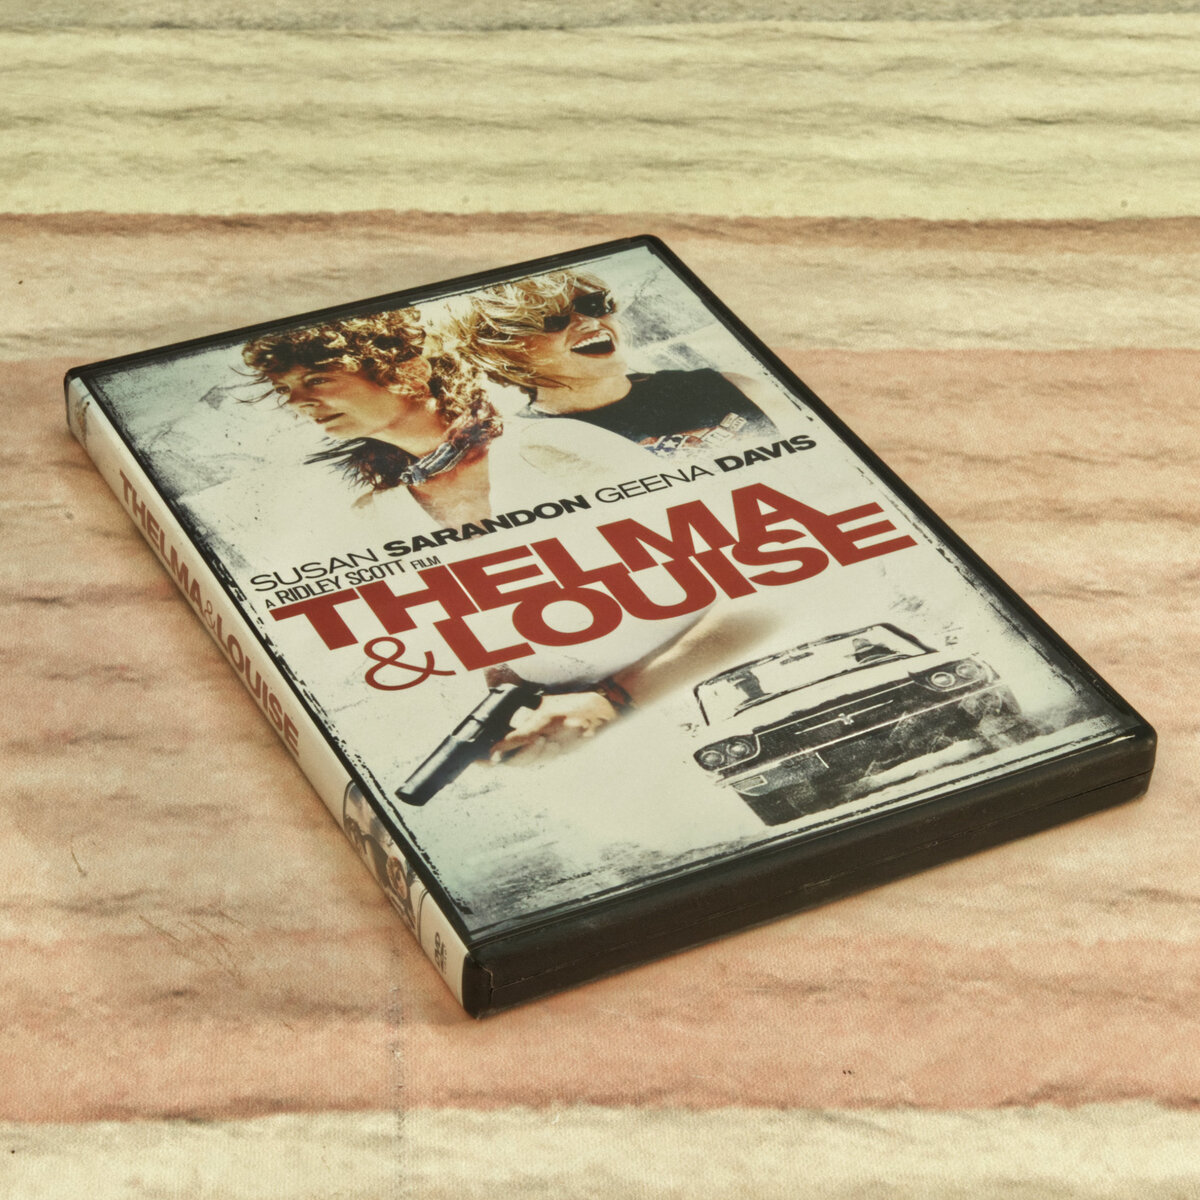 Thelma & Louise Movie DVD